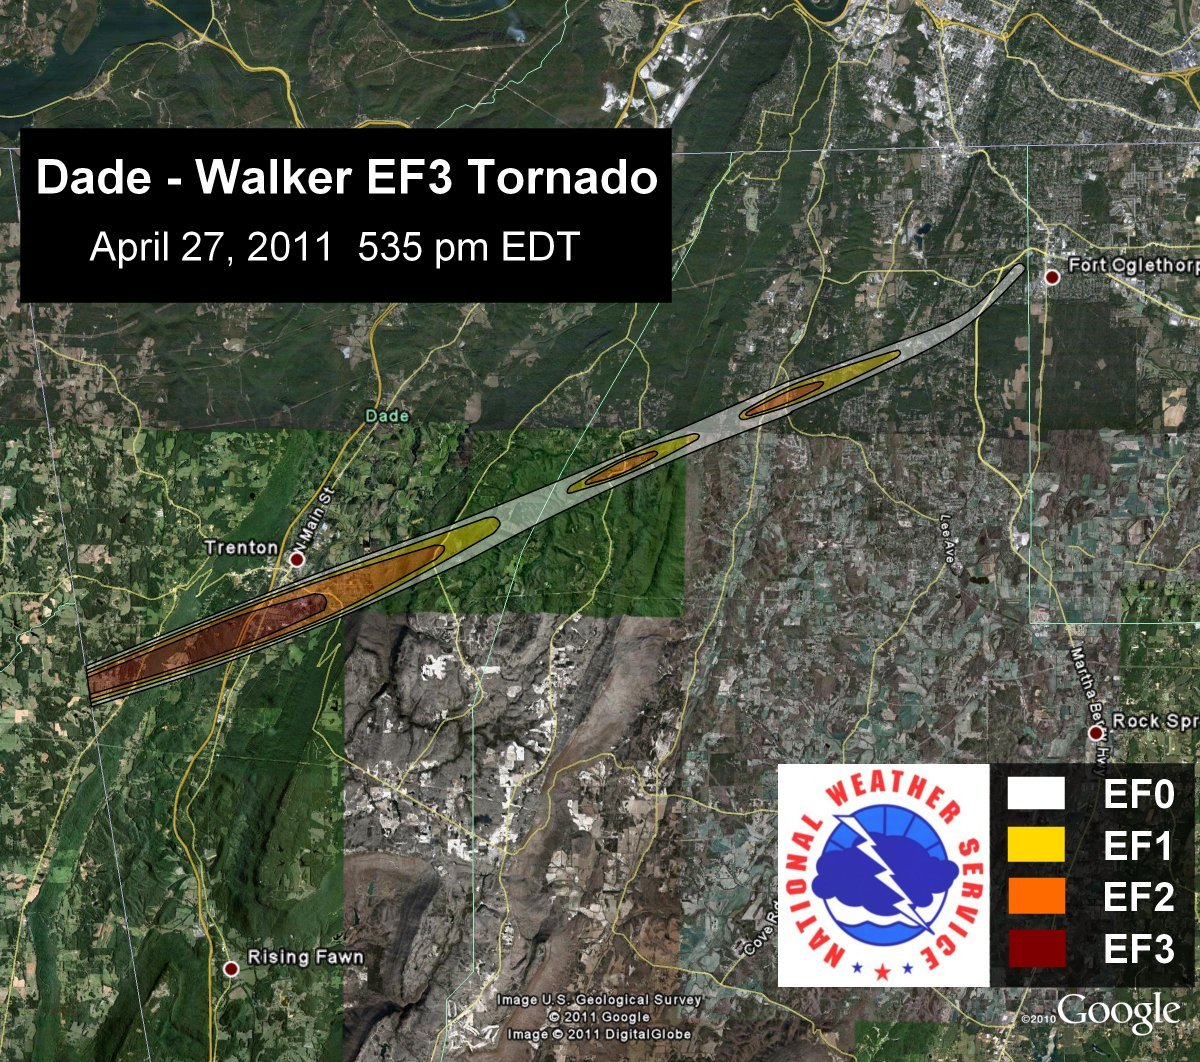 Path of Dade-Walker EF3 tornado